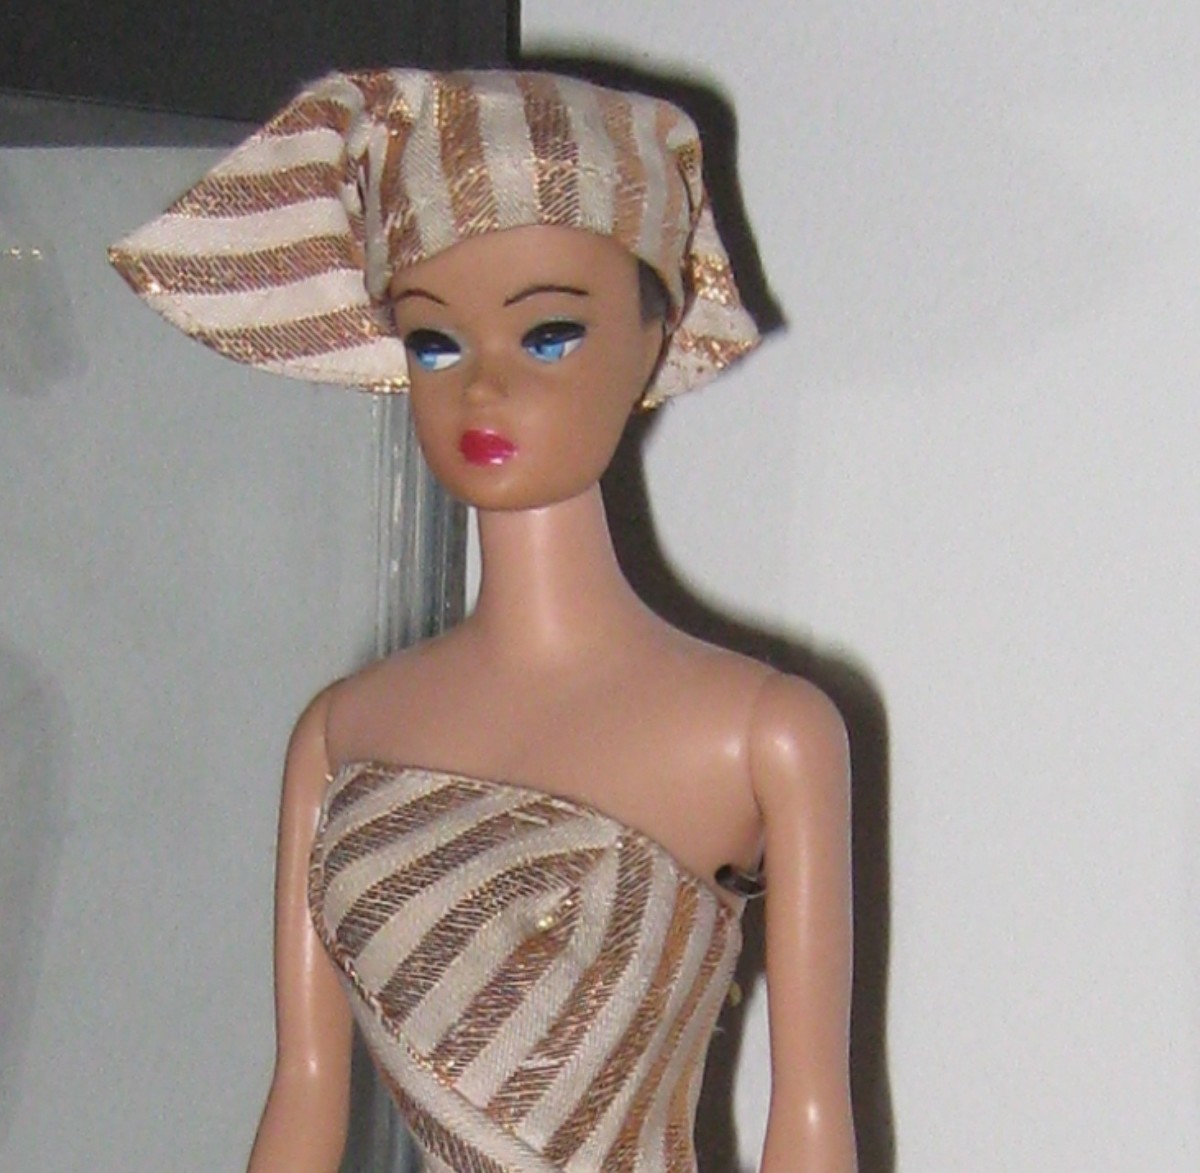 Details about   Vintage Avon Barbie Paper Dolls 1959 Number One & 1964 Ponytail Swirl New. 